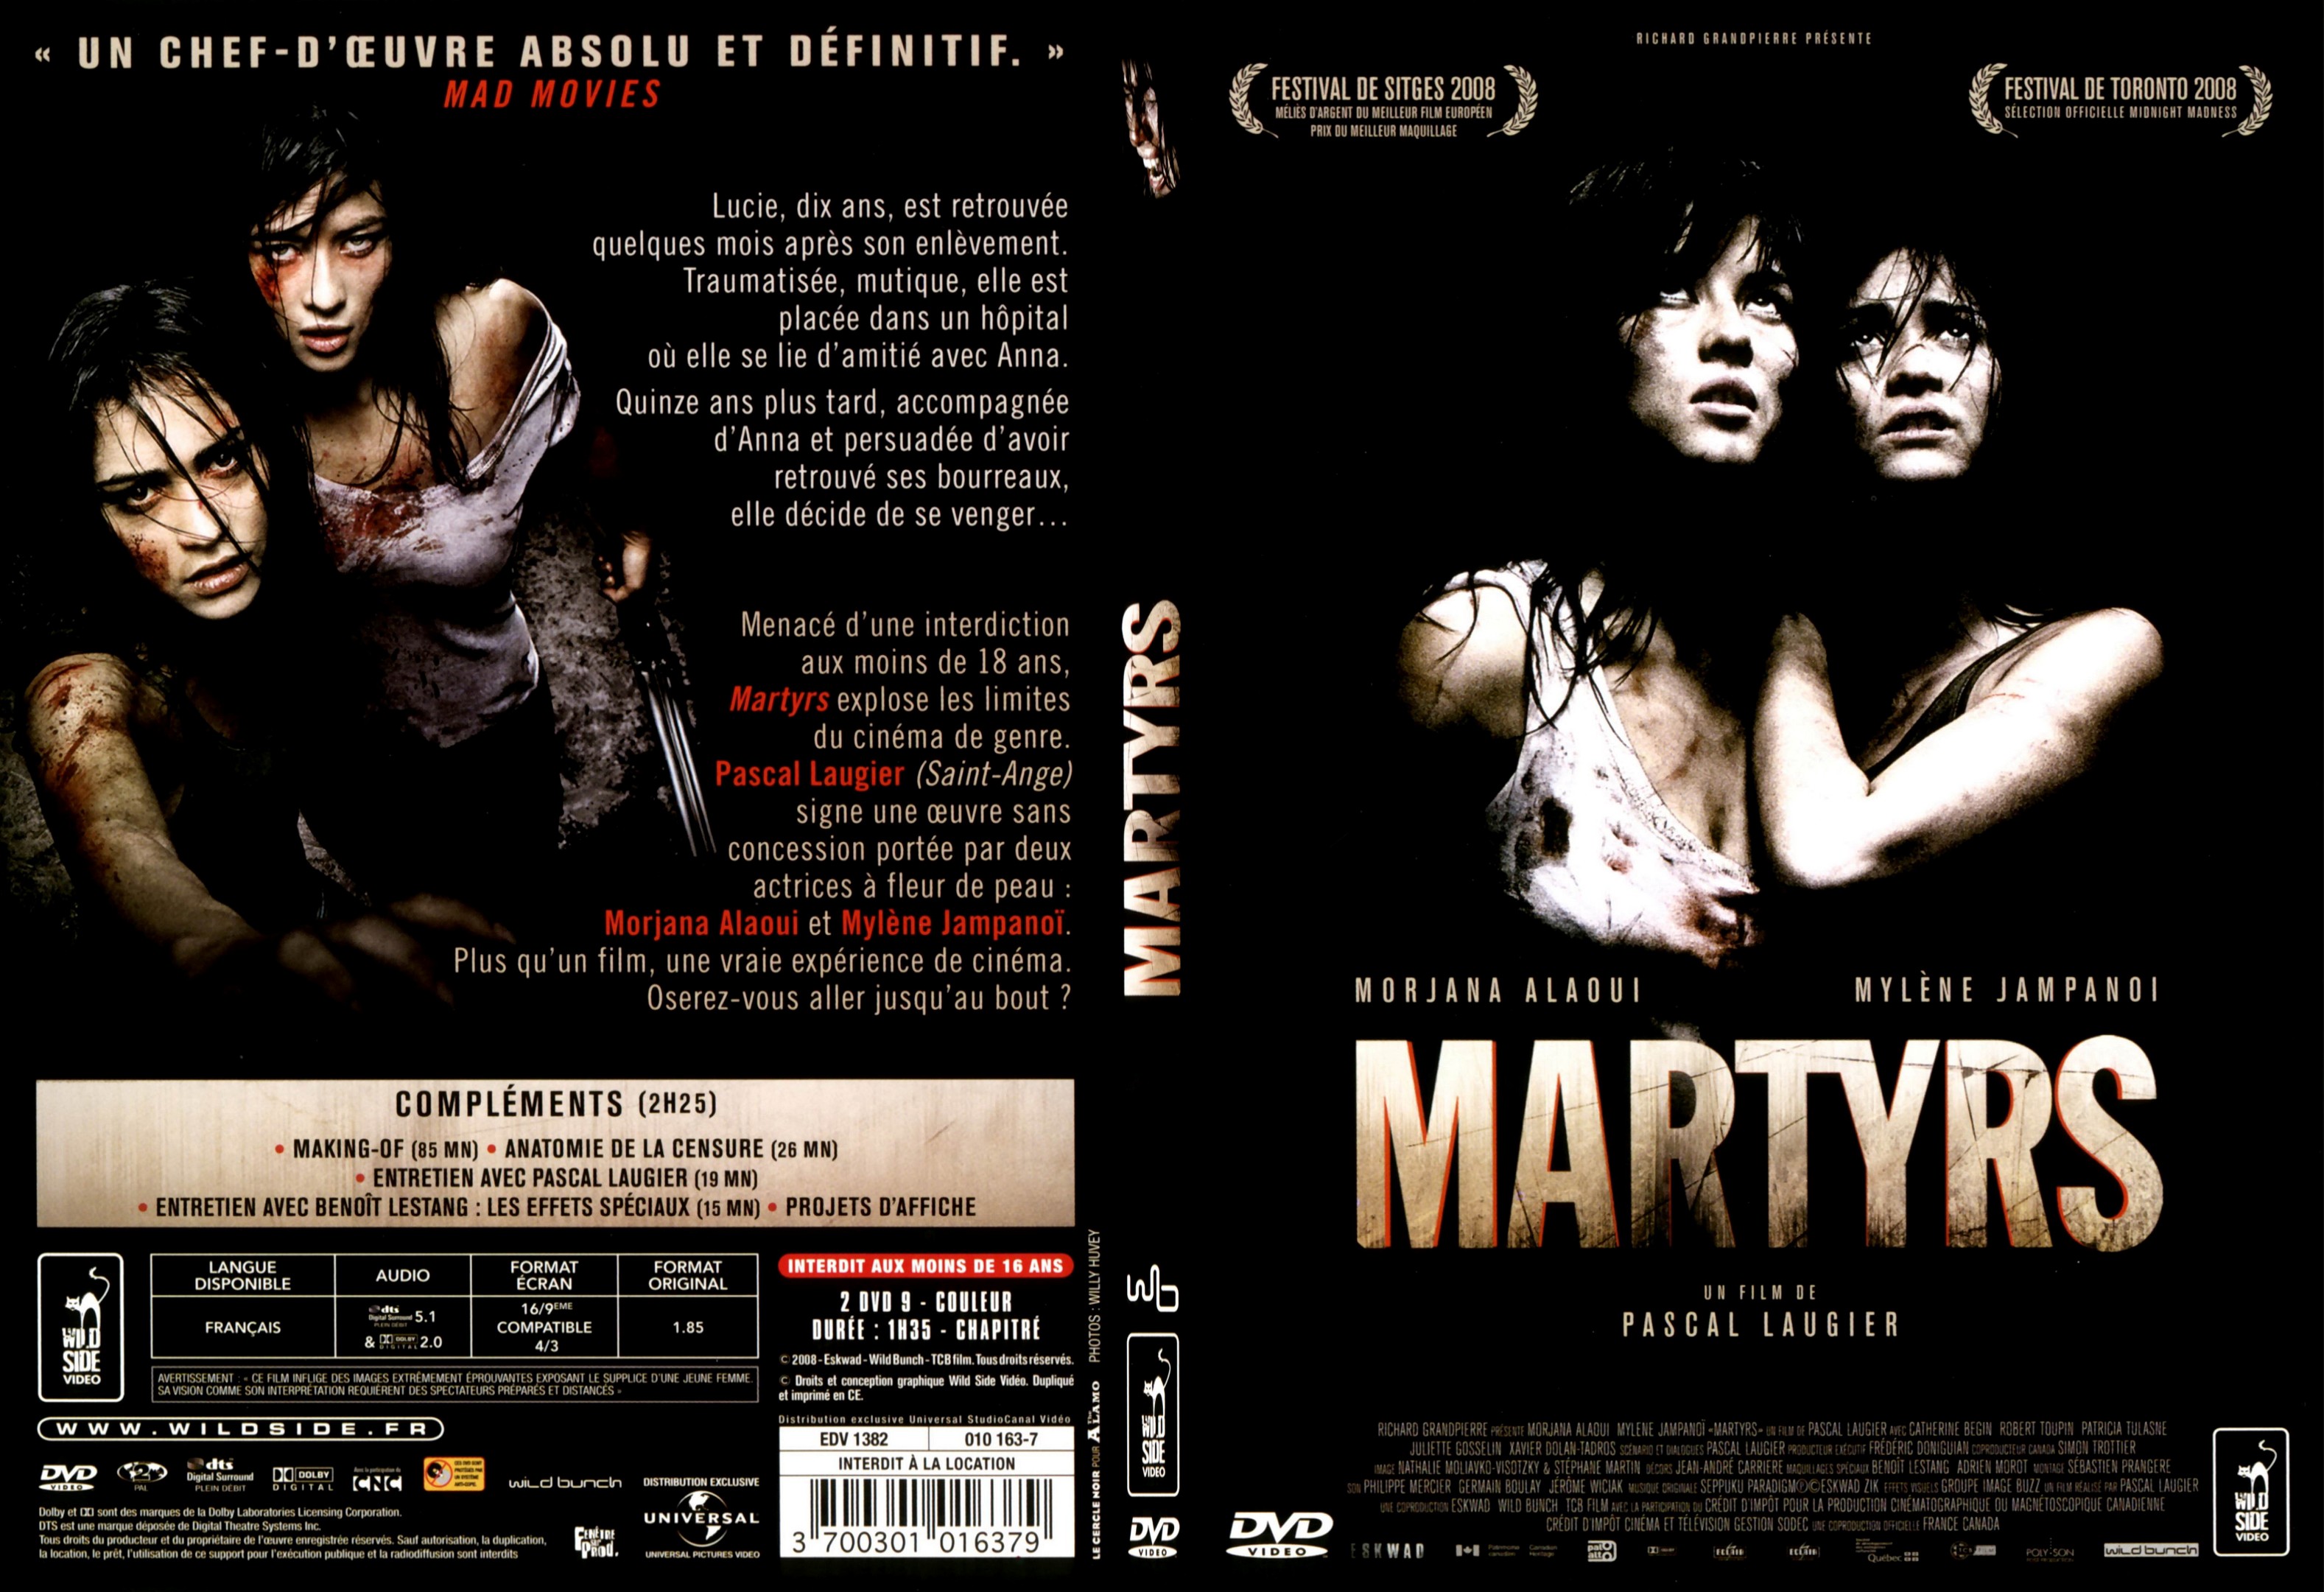 Jaquette DVD Martyrs - SLIM